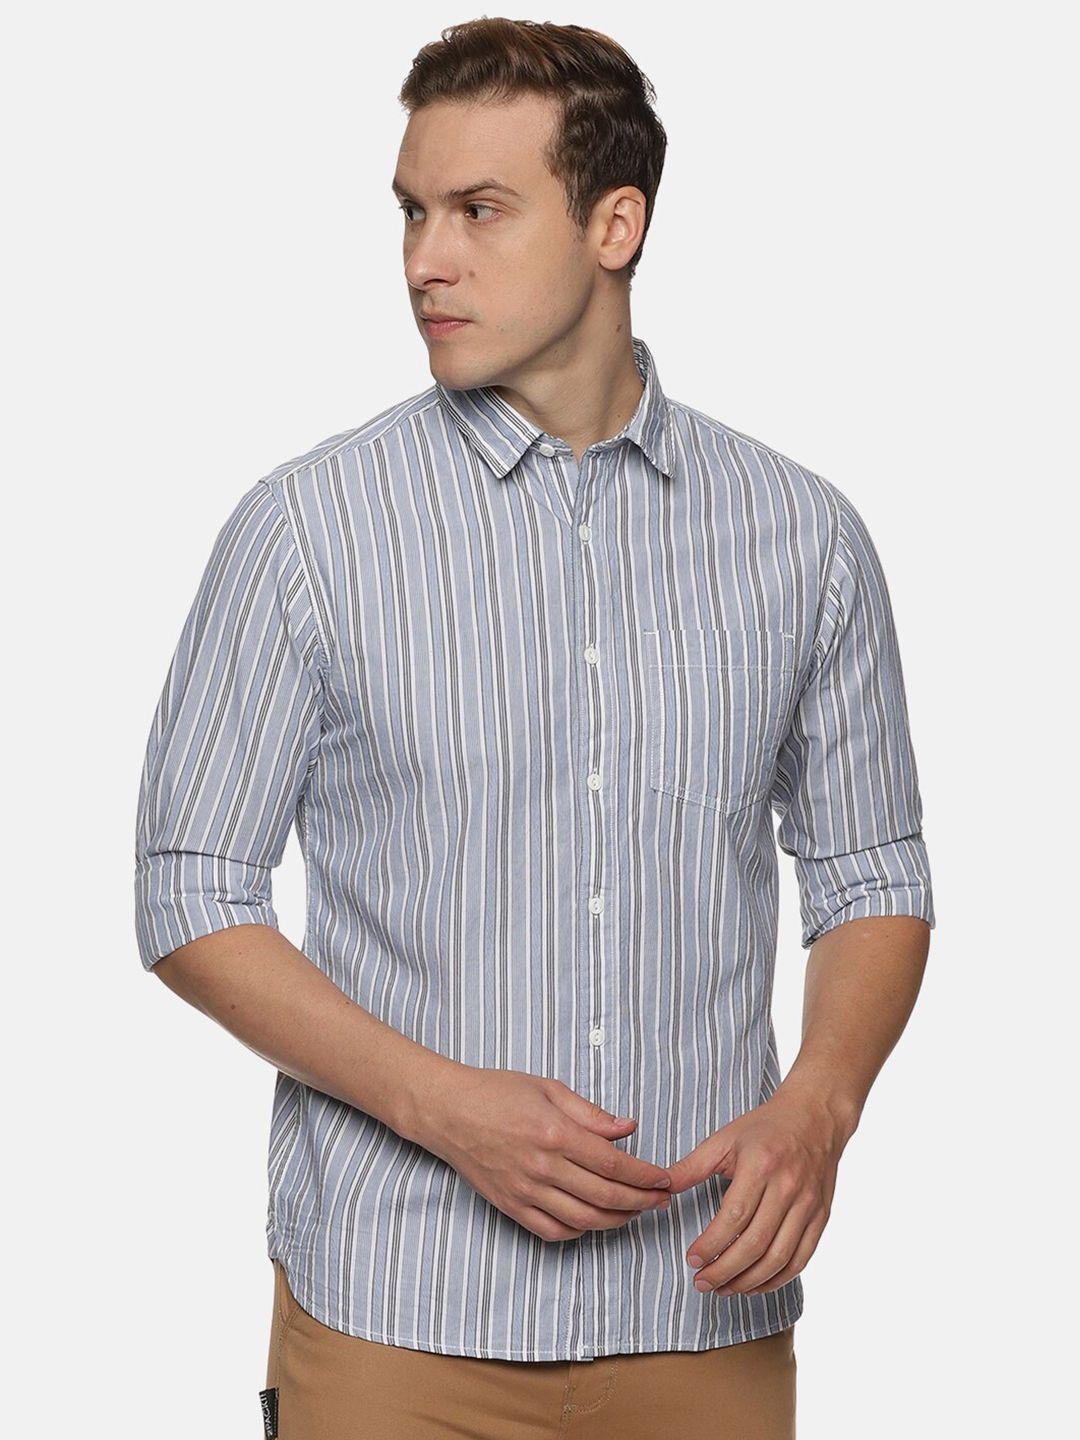 impackt men slim fit striped casual cotton shirt